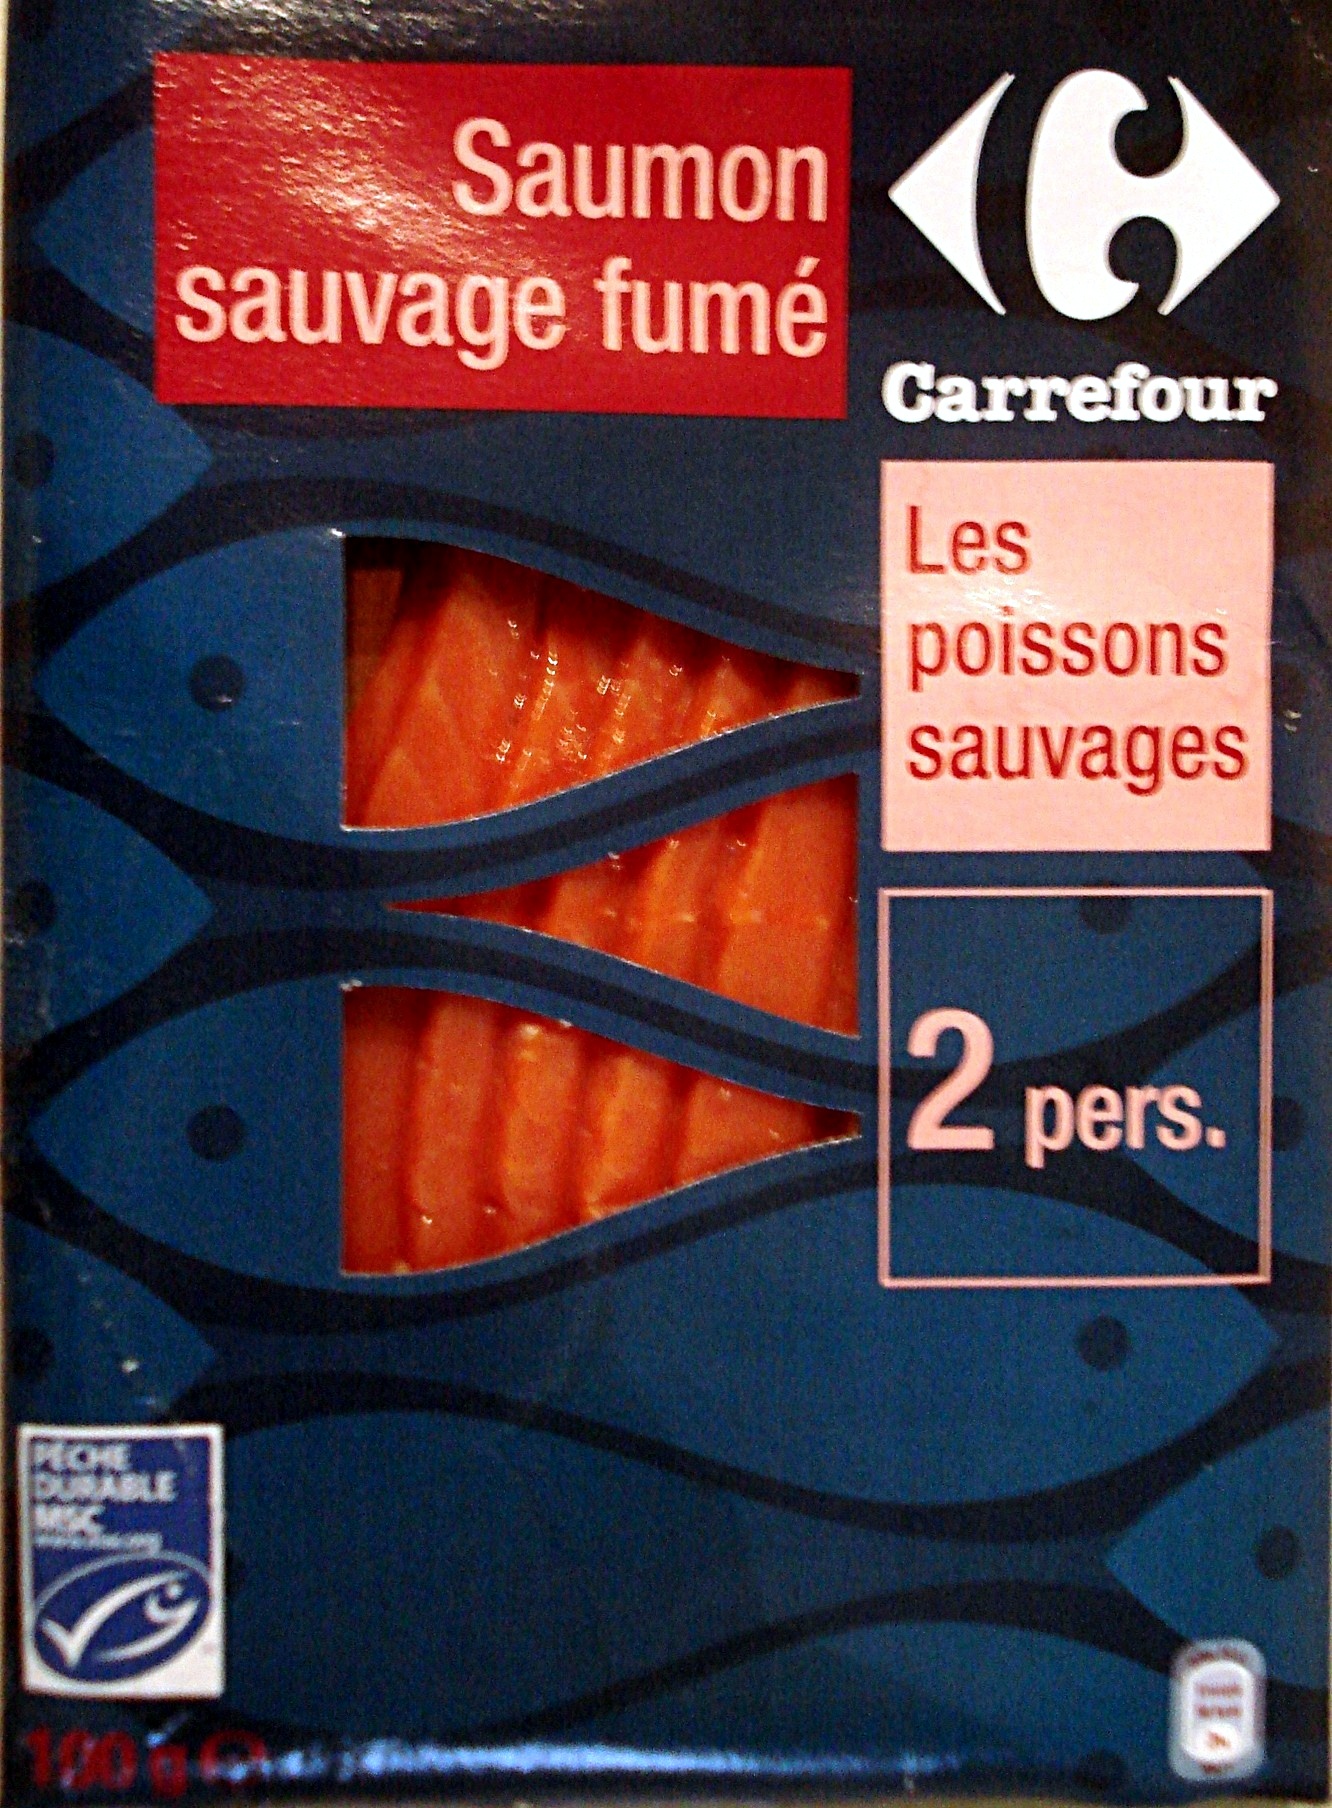 Saumon sauvage fumé - Product - fr